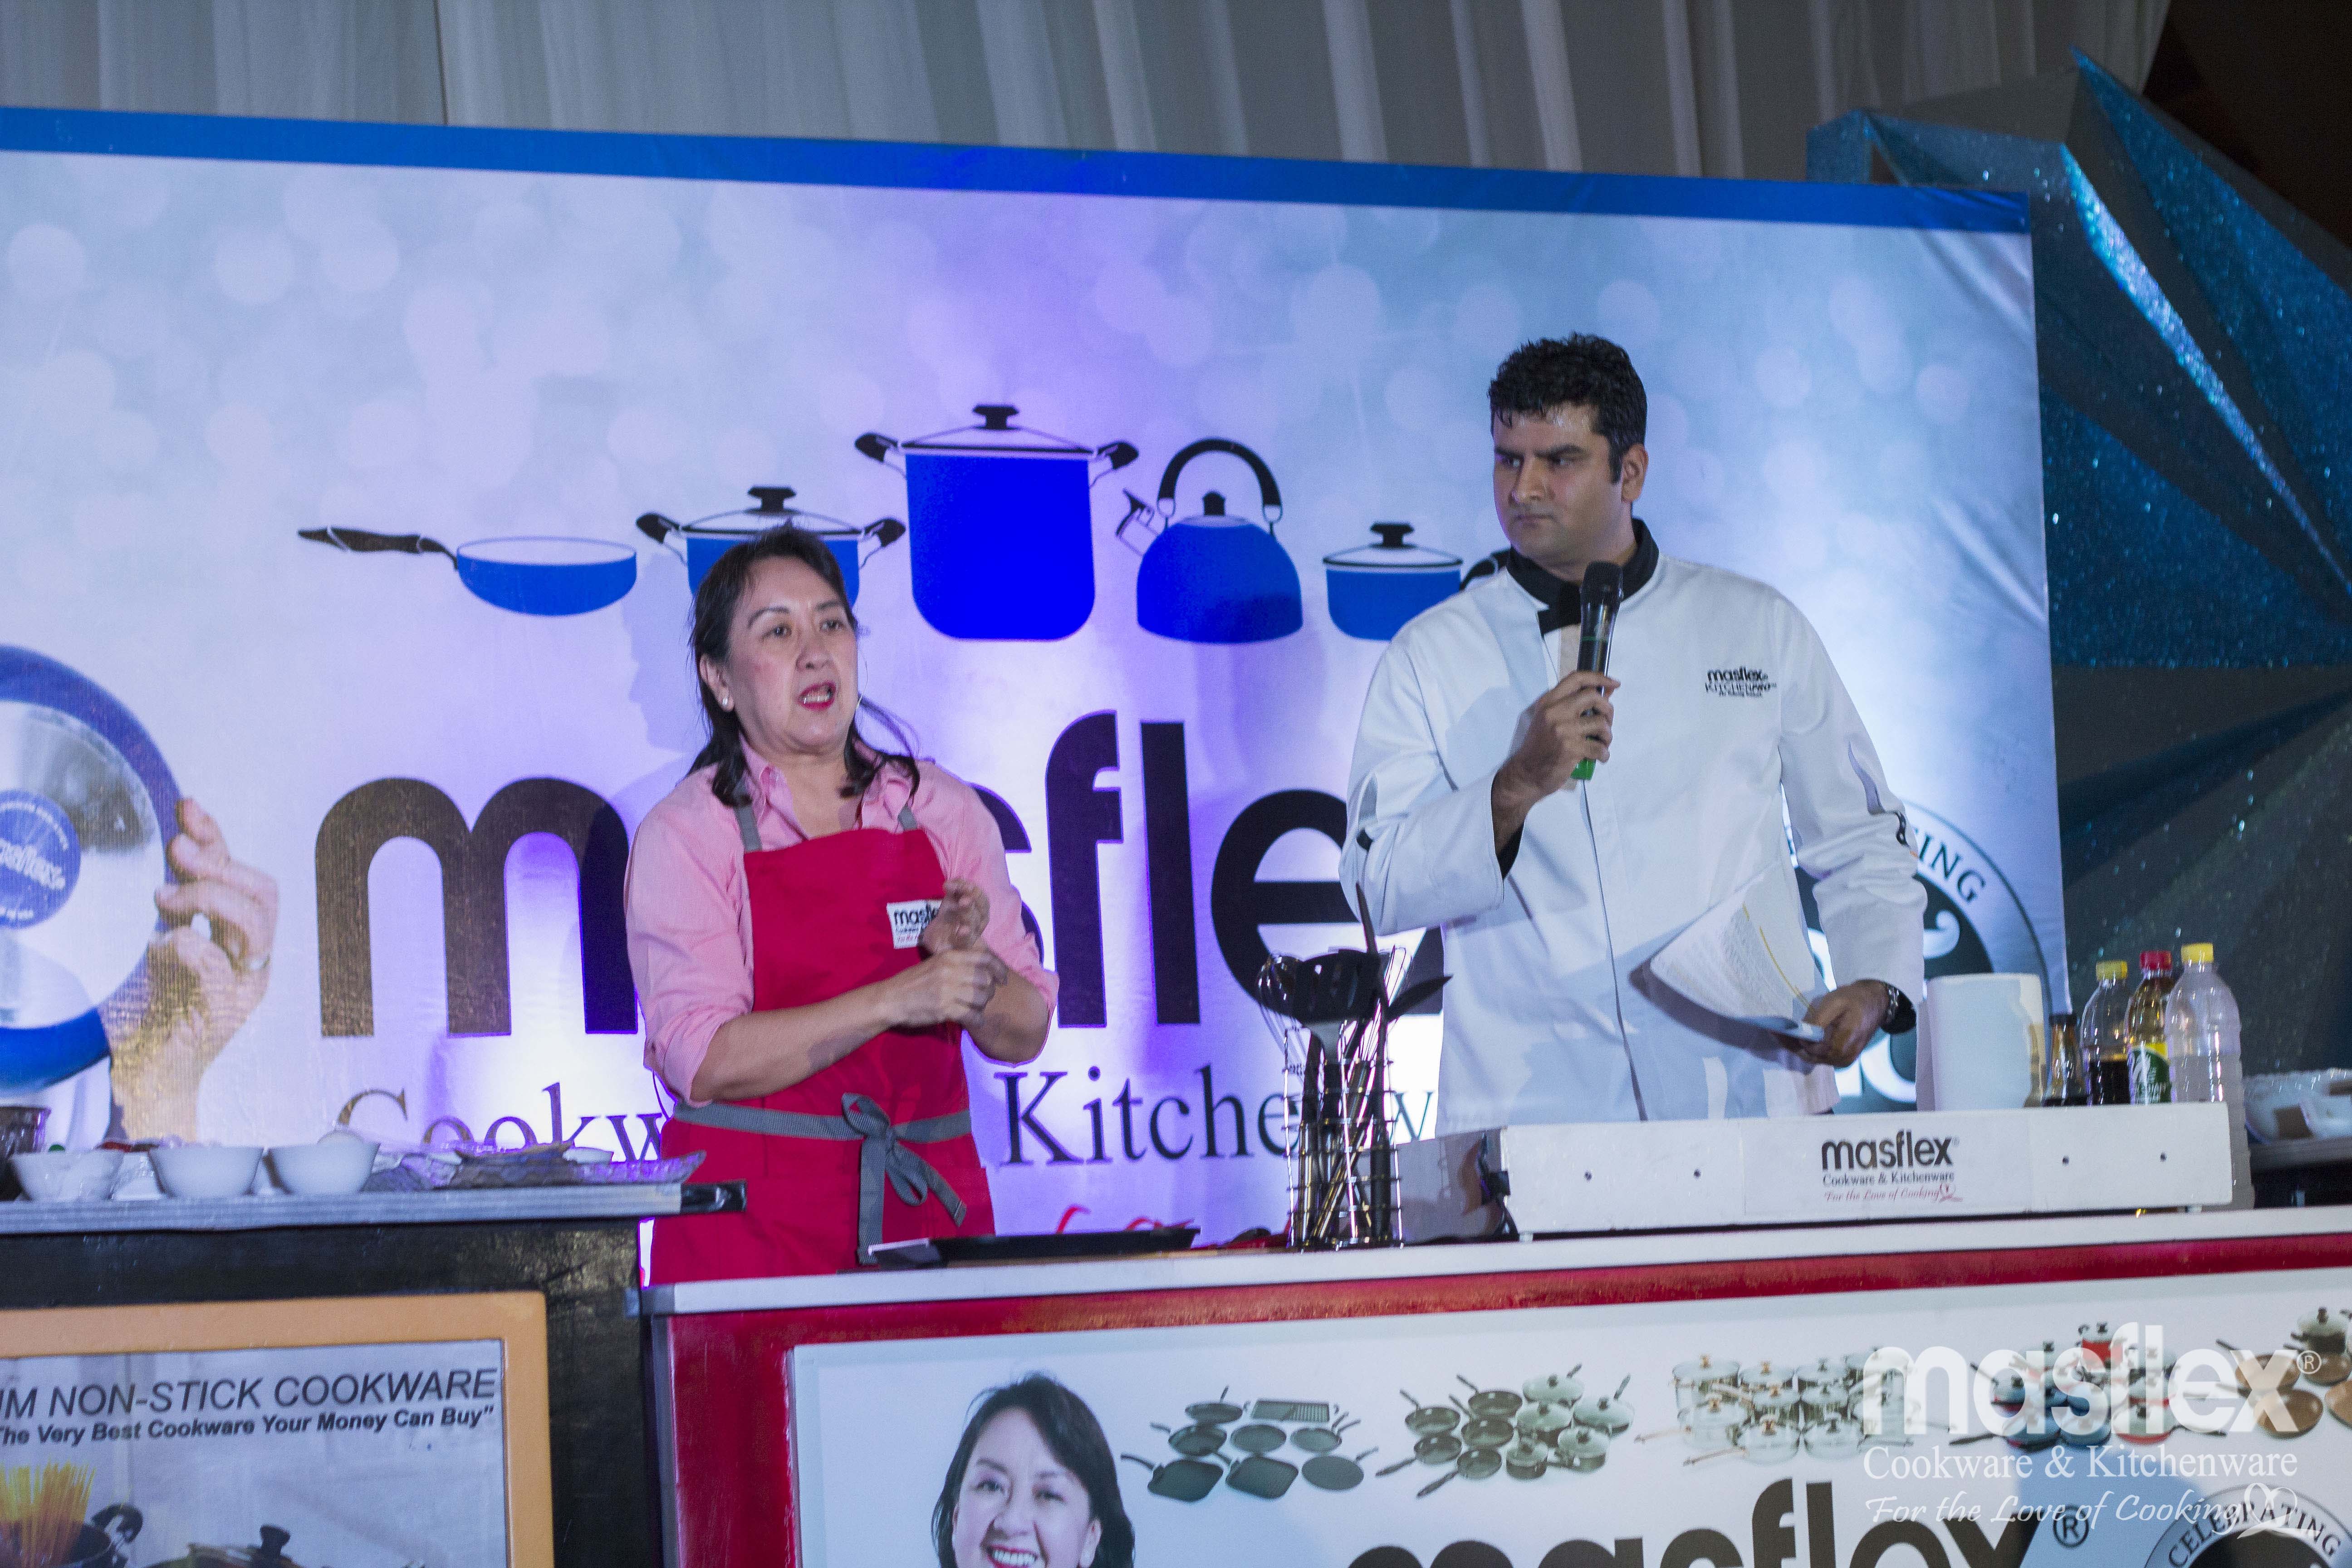 MS. Nancy Reyes – Lumen (Brand Ambassador together with the Host Mr. Hiren Mirchandani – VP for Marketing